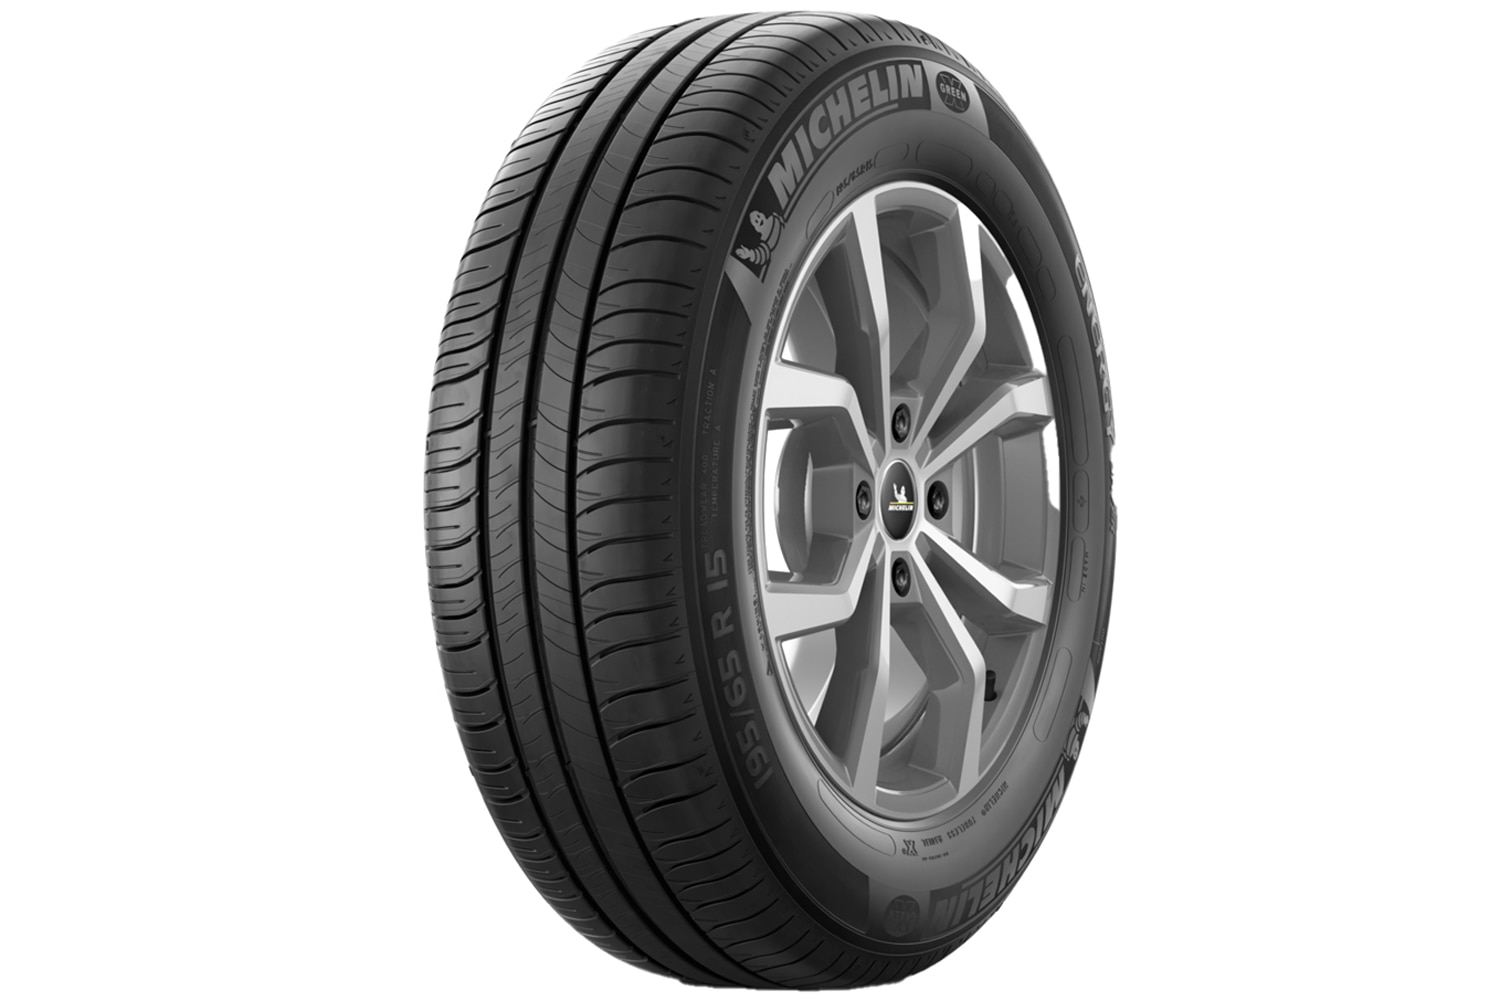  Closeup of Michelin Energy Saver A/S tire